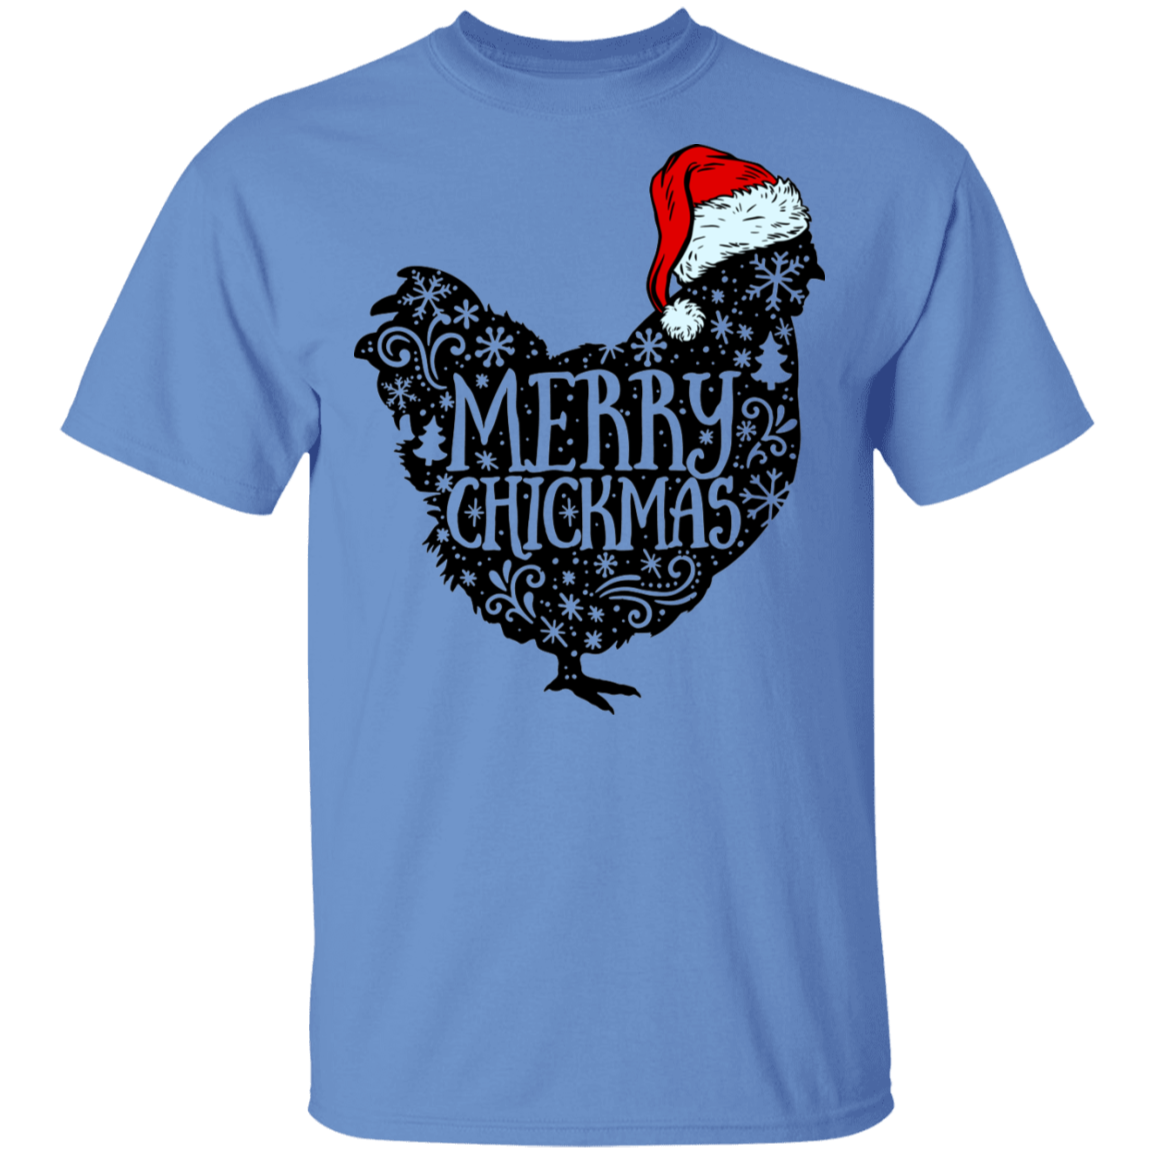 Merry Chickmas t-shirt